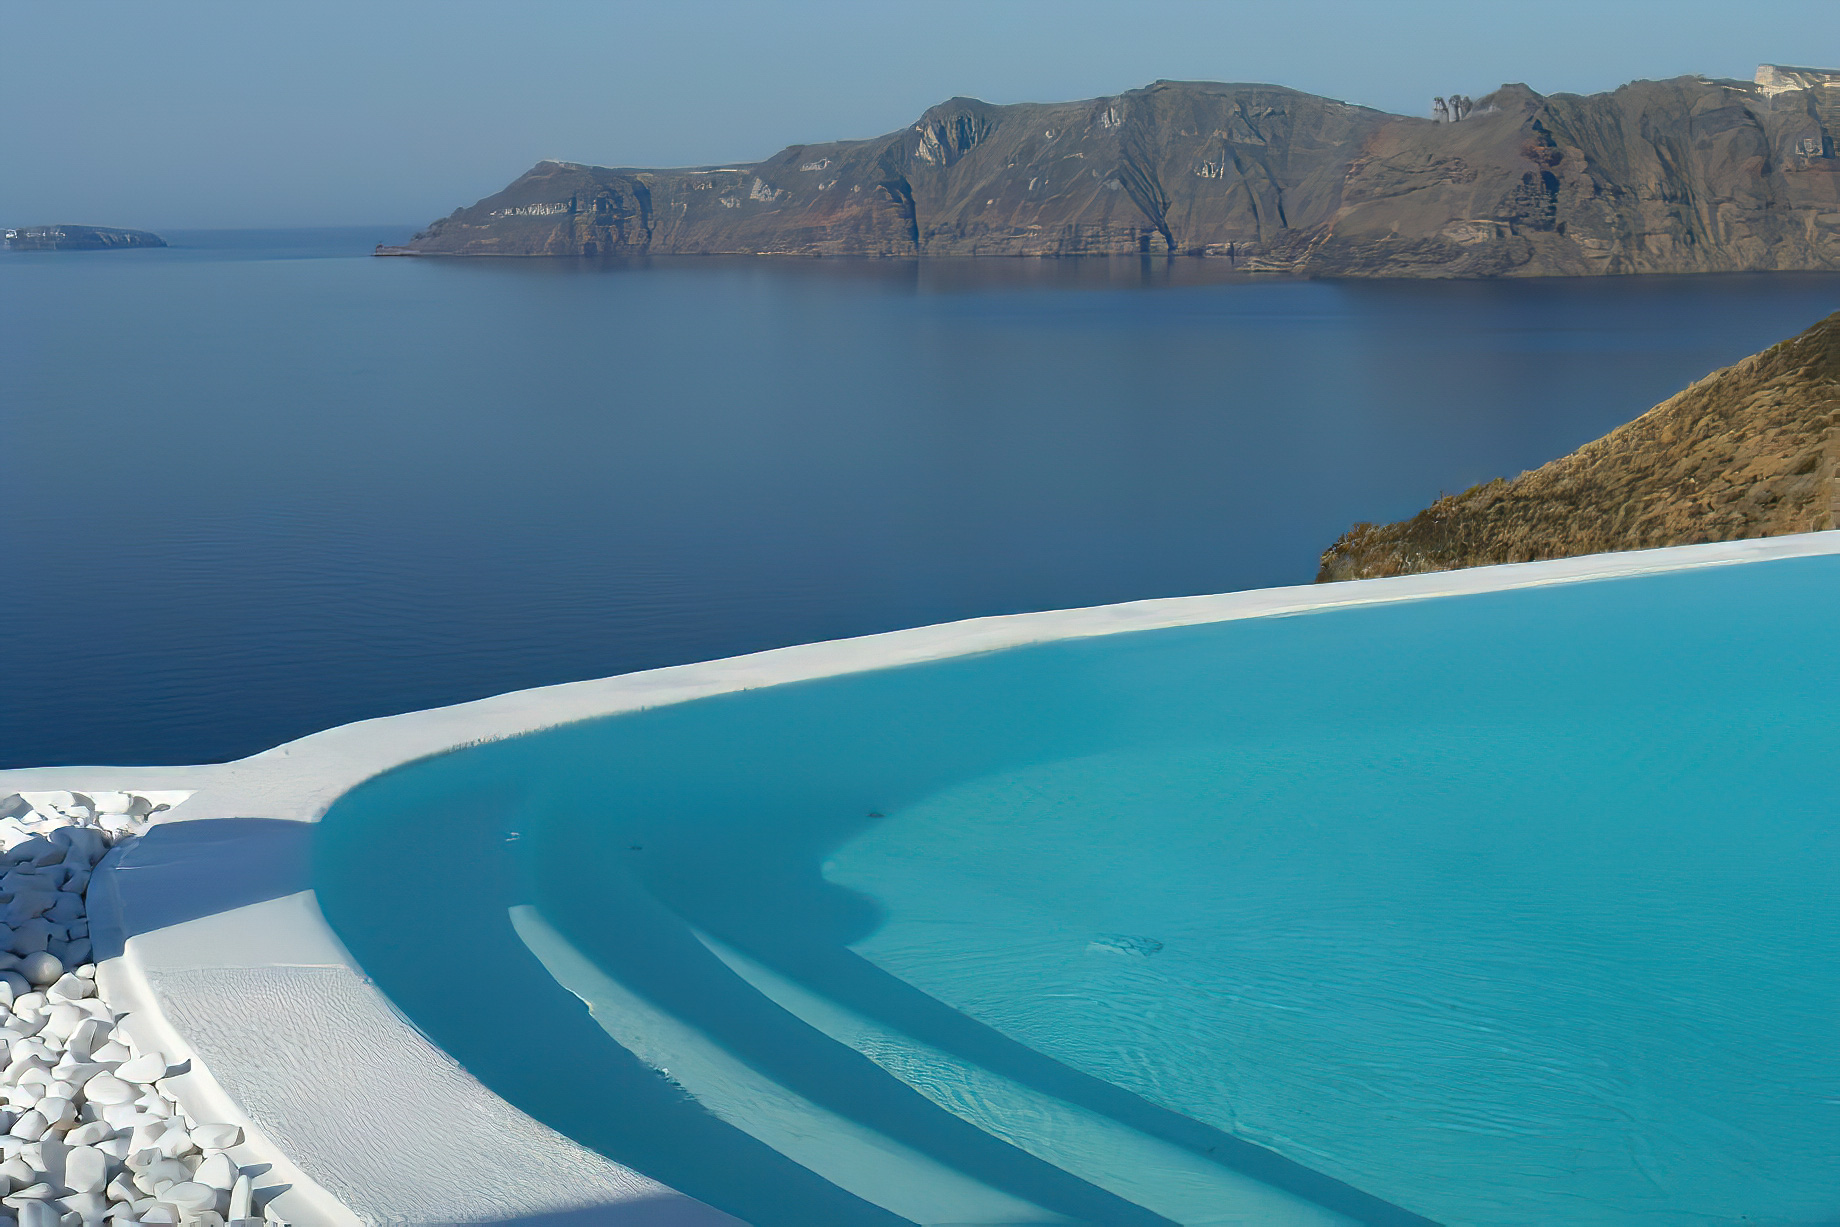 Mystique Hotel Santorini – Oia, Santorini Island, Greece – Clifftop Ocean View Infinity Pool